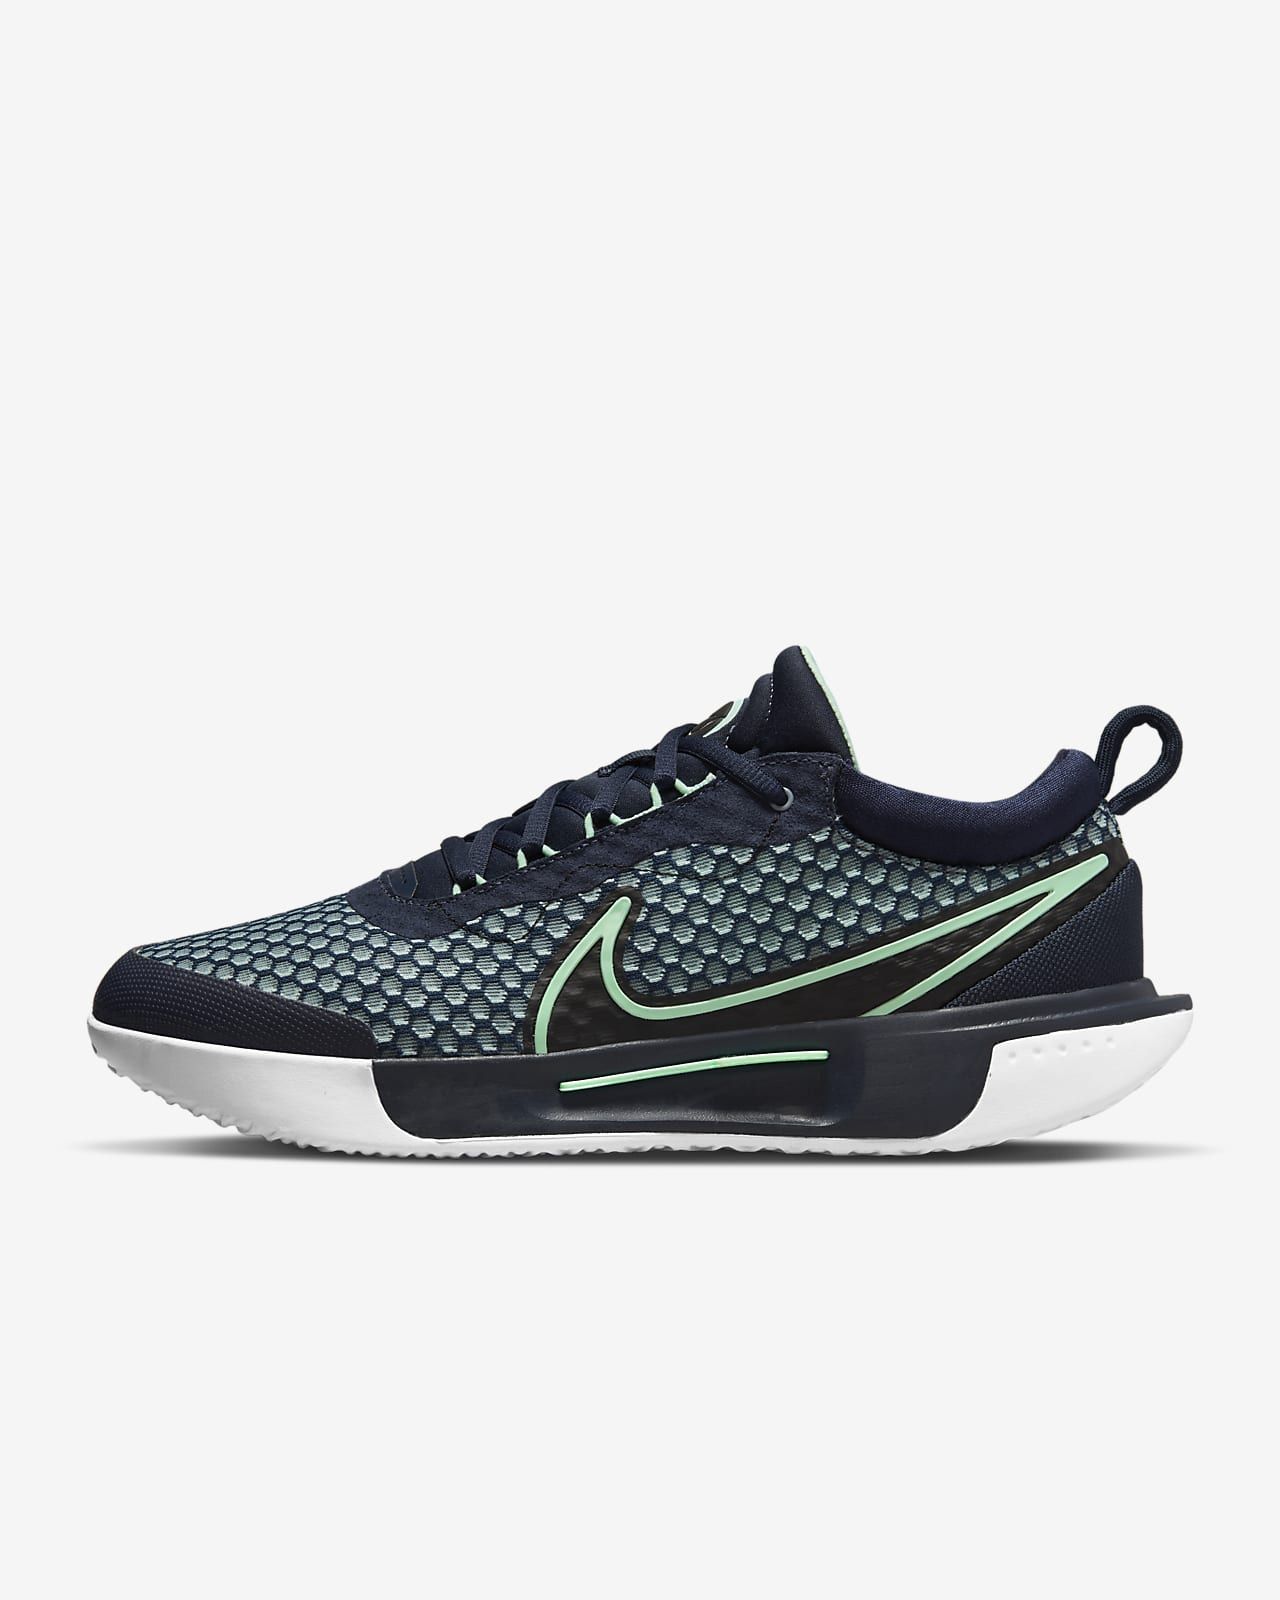 Men's Hard Court Tennis Shoes | Nike (US)